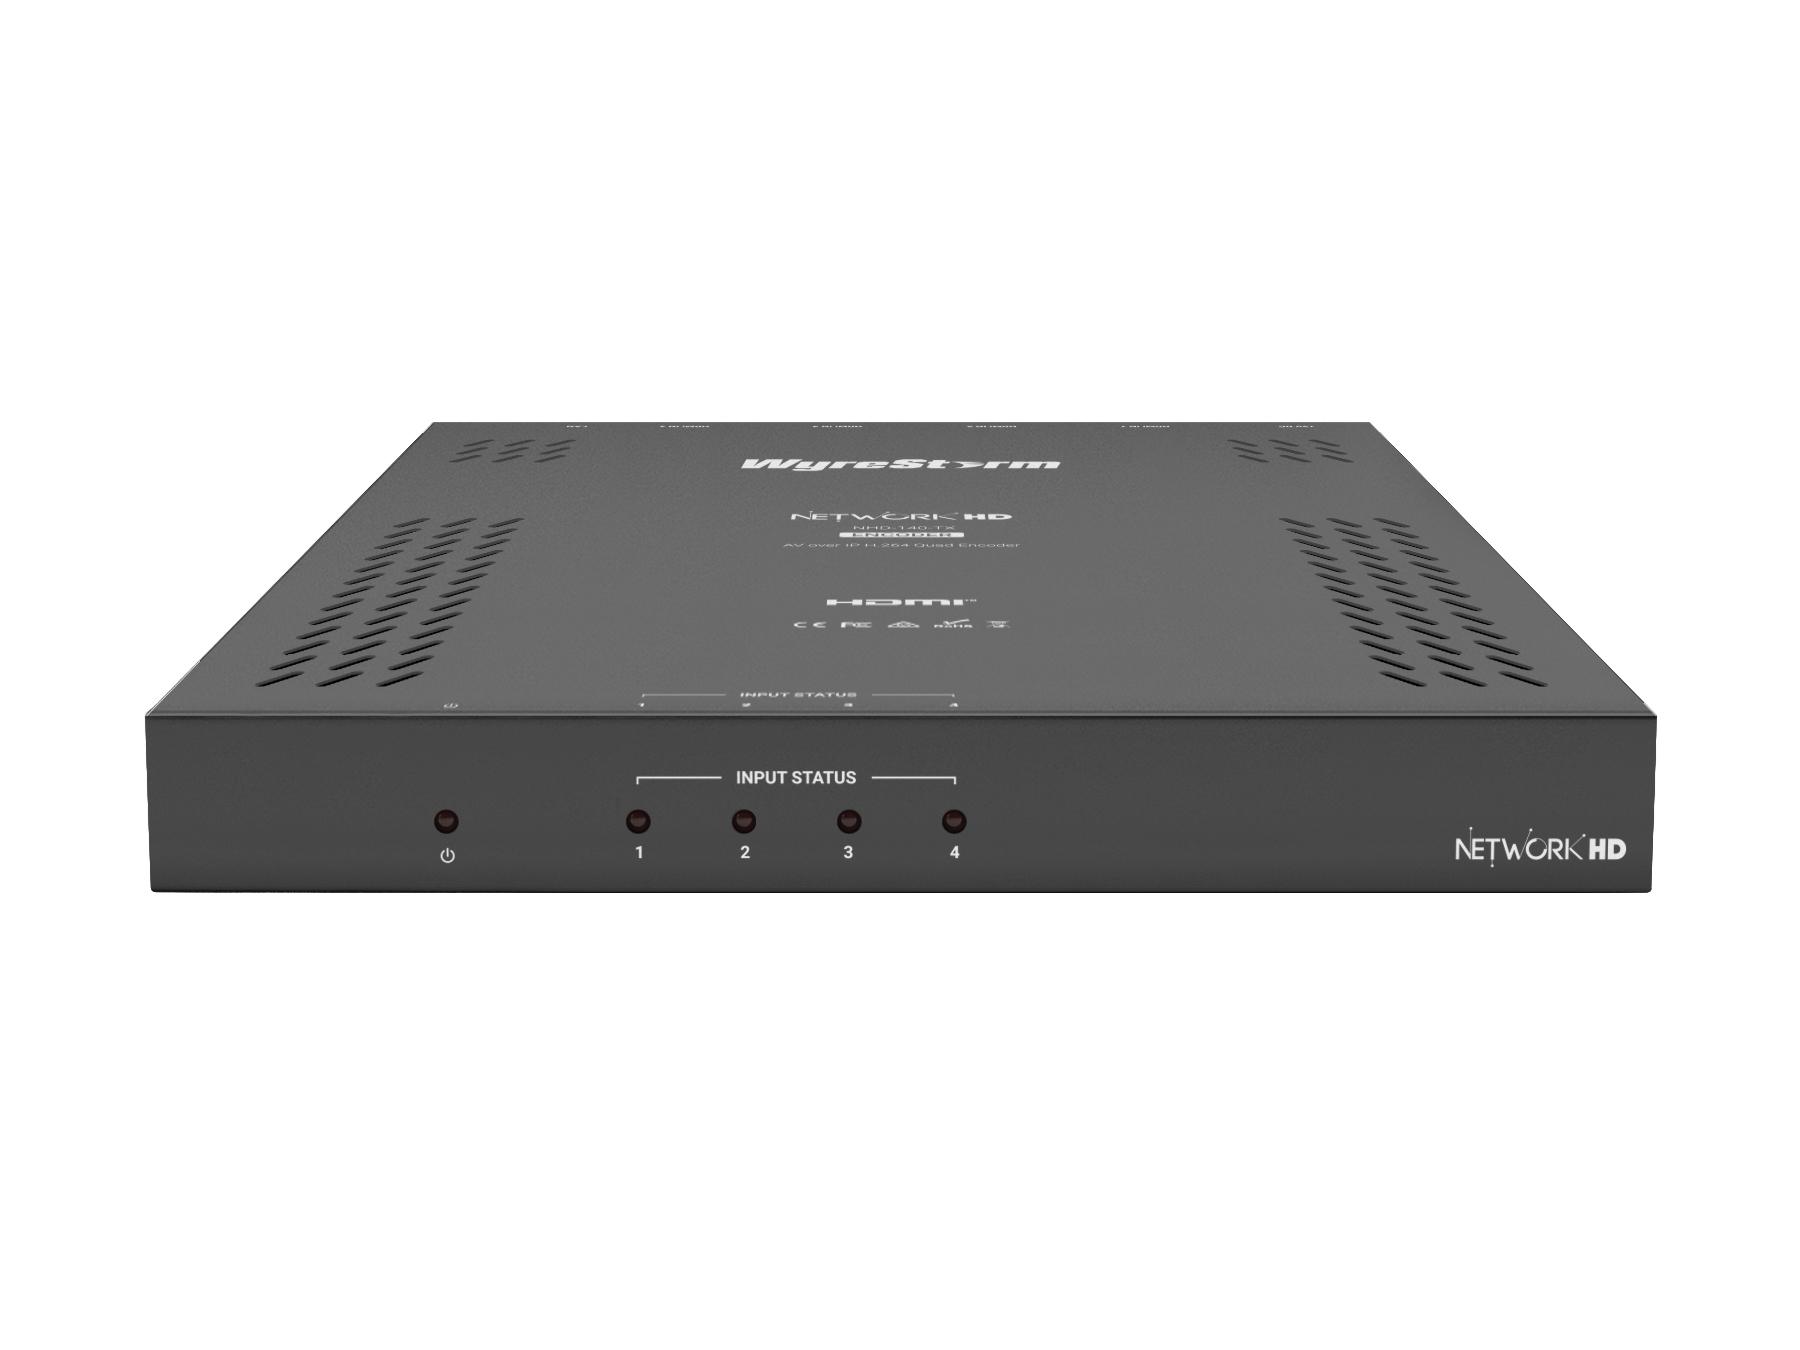 NHD-140-TX NetworkHD 100 Series AV over IP H.264 Quad Encoder by WyreStorm